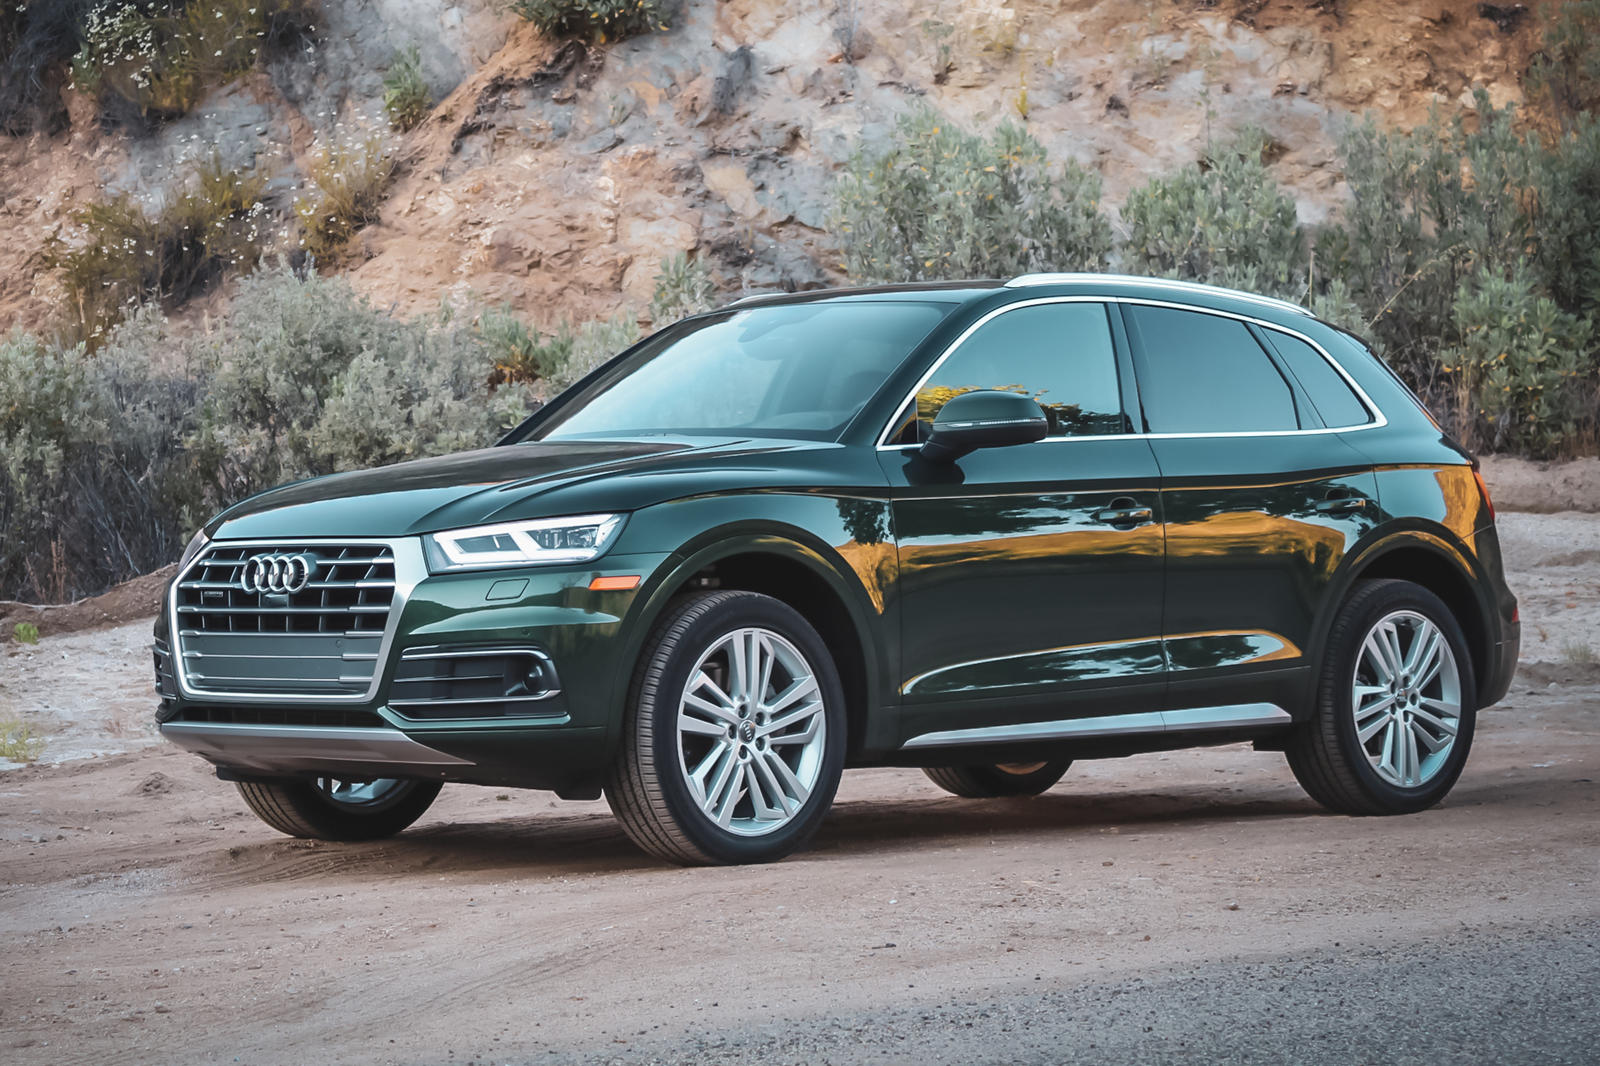 2019 Audi Q5 Review - Three Ways It's Different